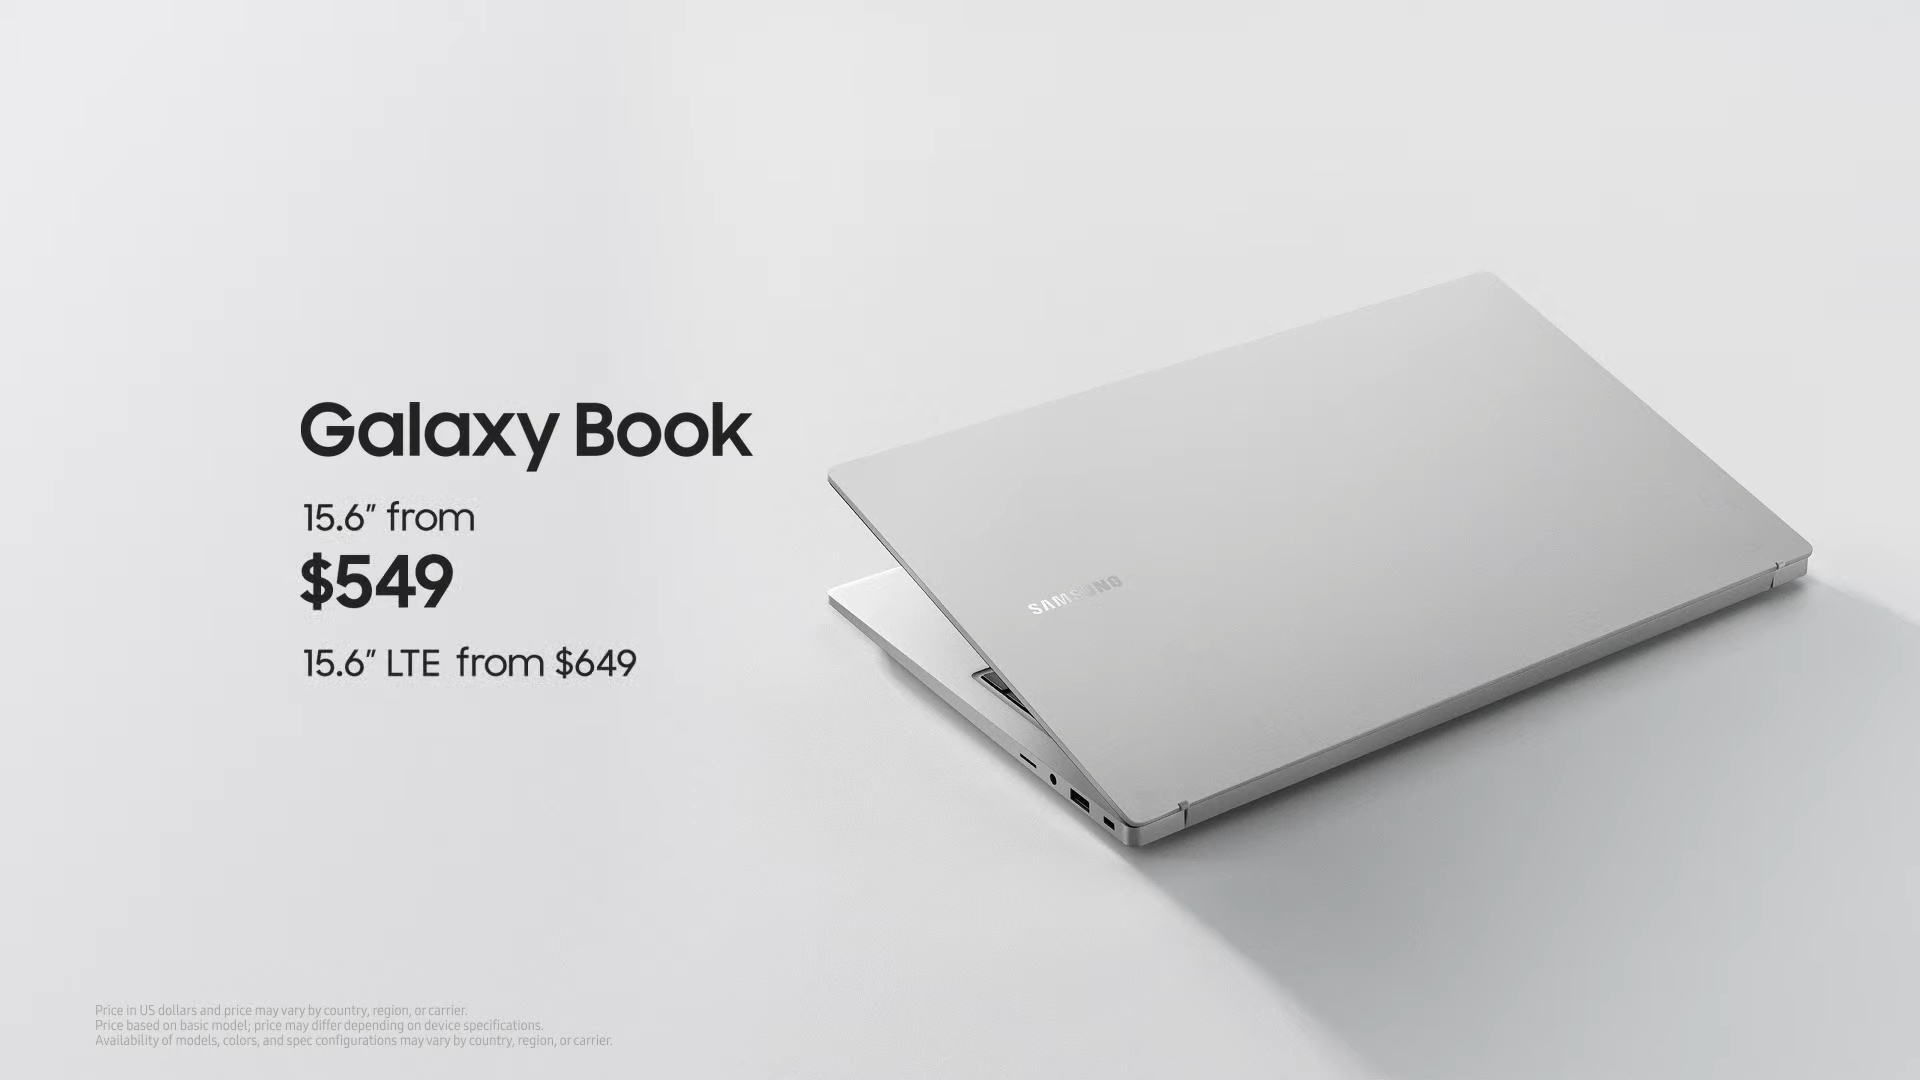 Samsung Galaxy Book price